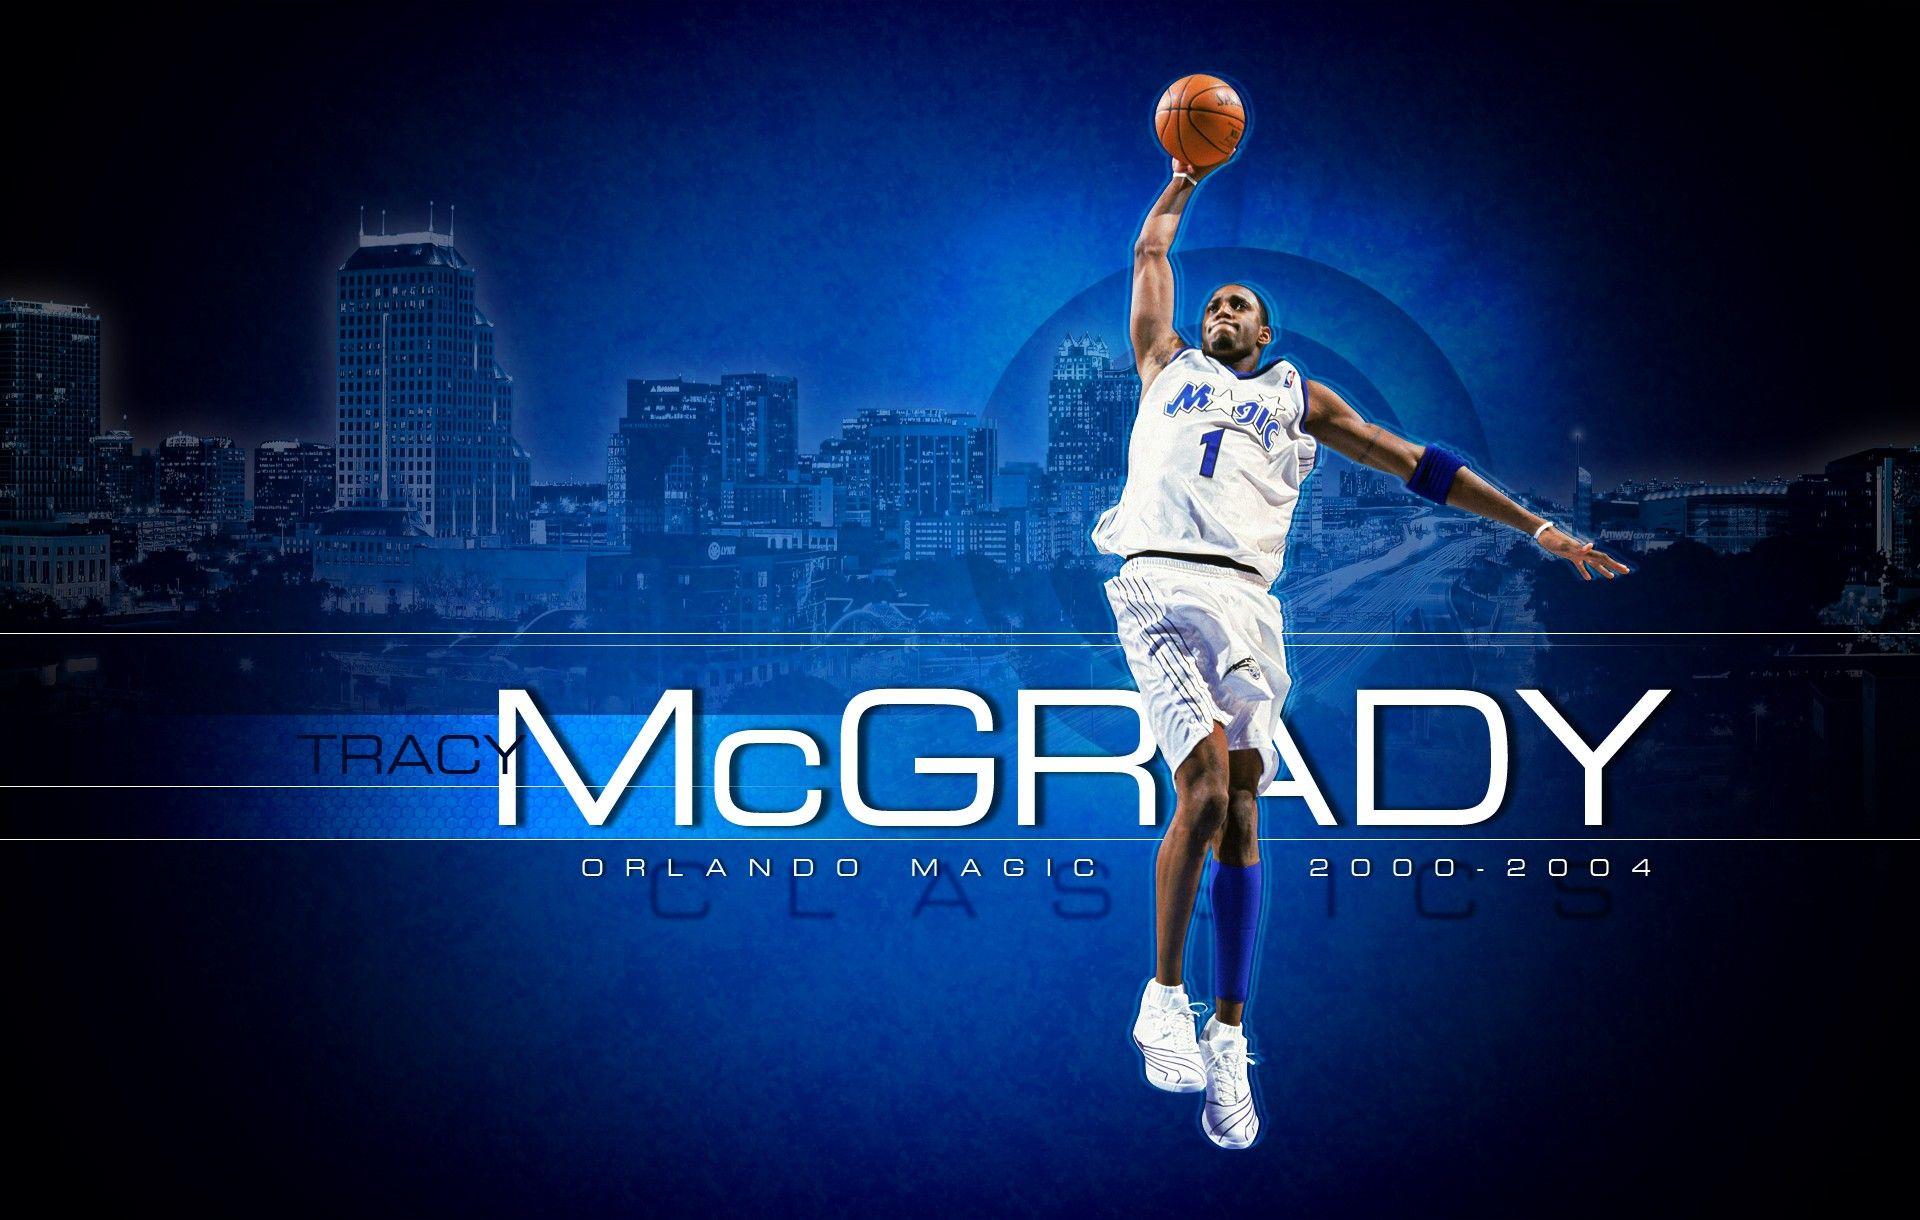 Download NBA Star Tracy McGrady Wallpaper